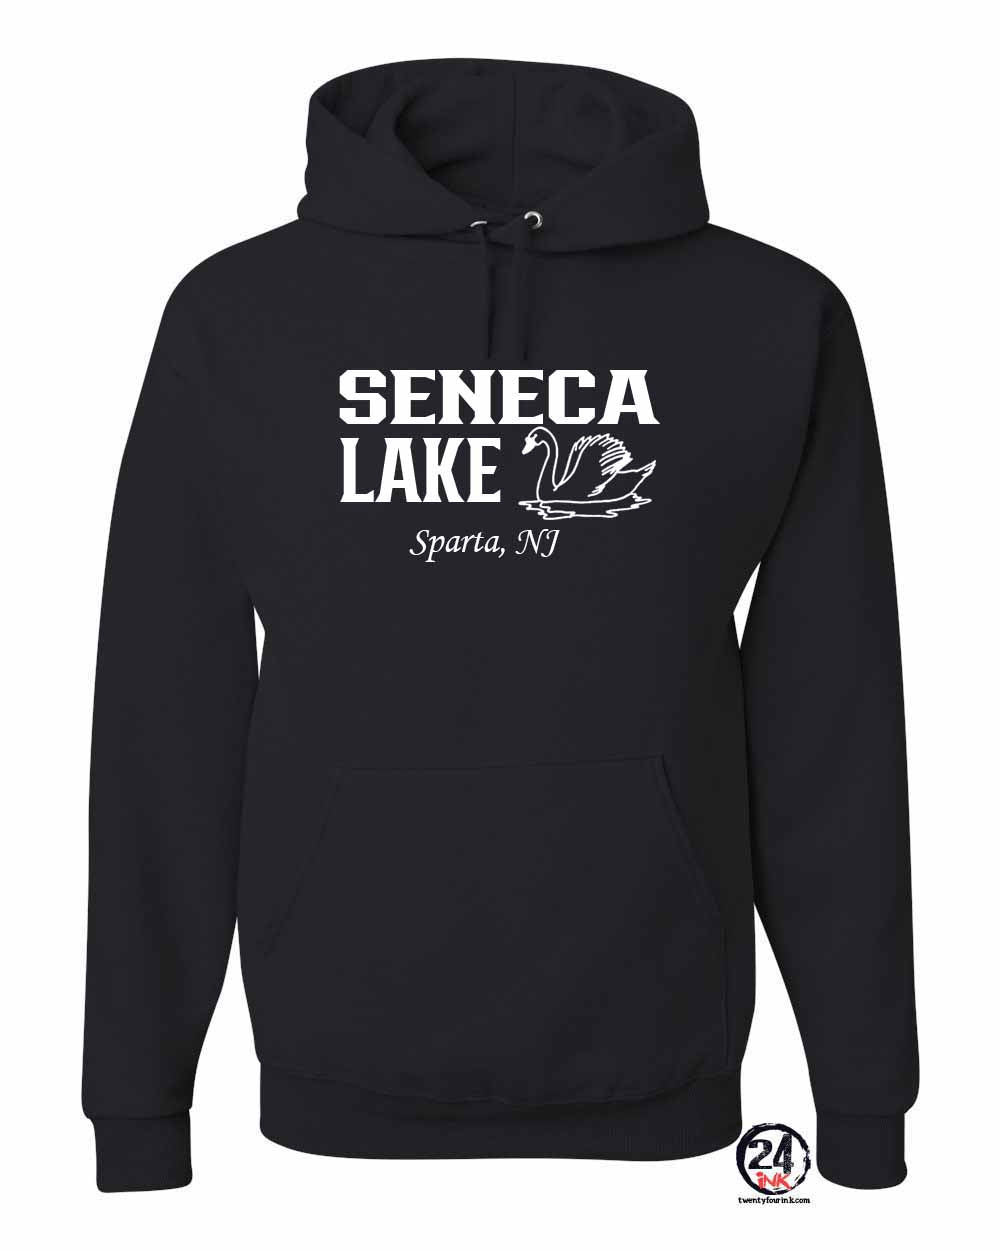 Seneca Lake Design 1 Hooded Sweatshirt